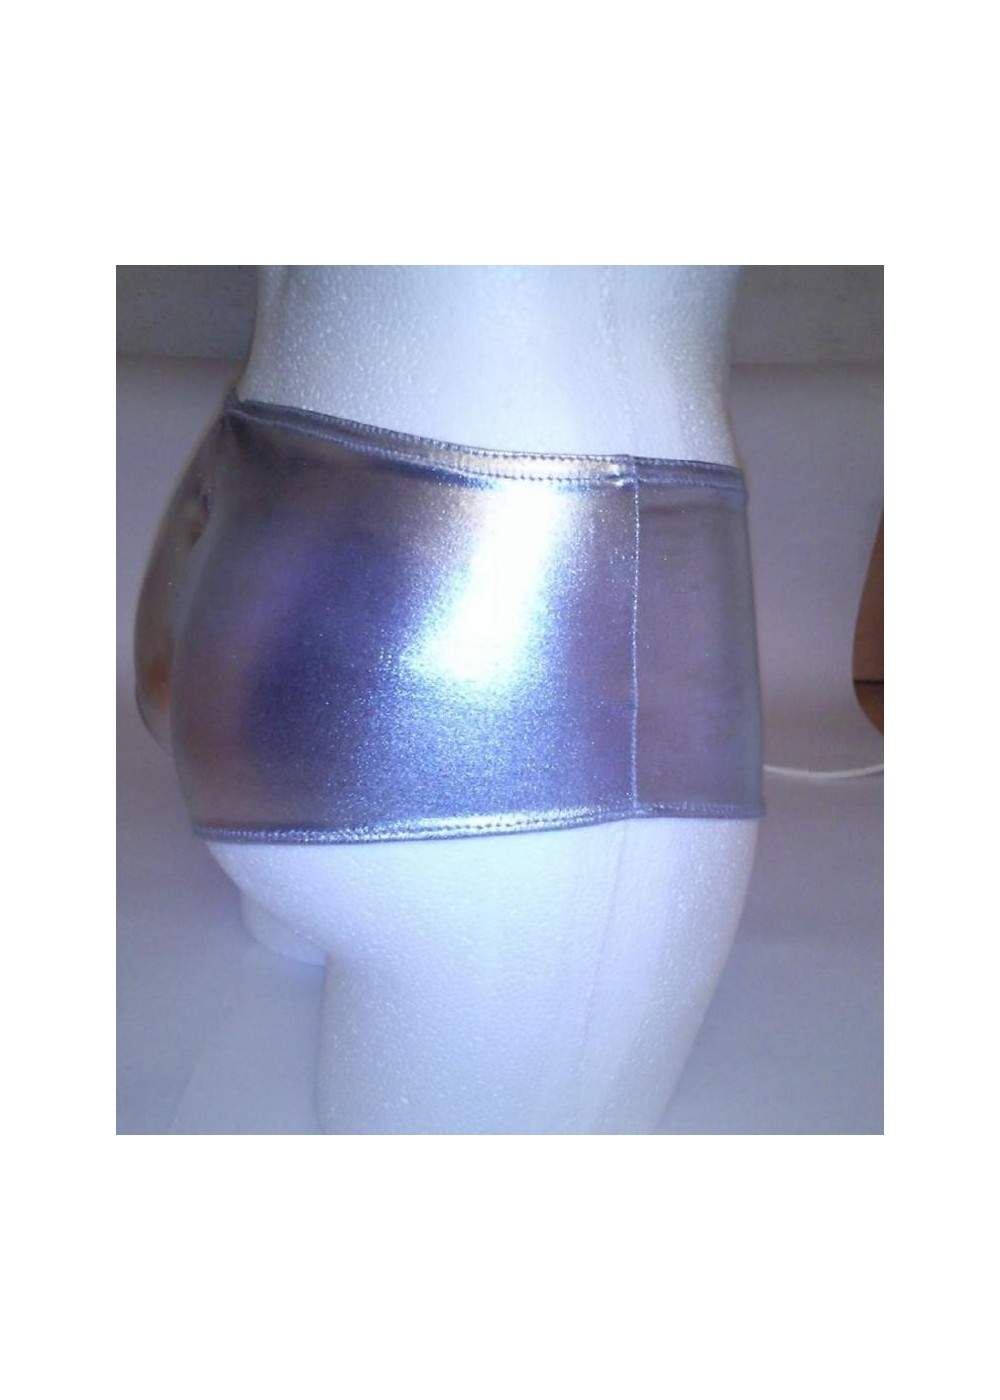 f.girth GoGo wetlook hotpants silver metallic 10,00 € - 